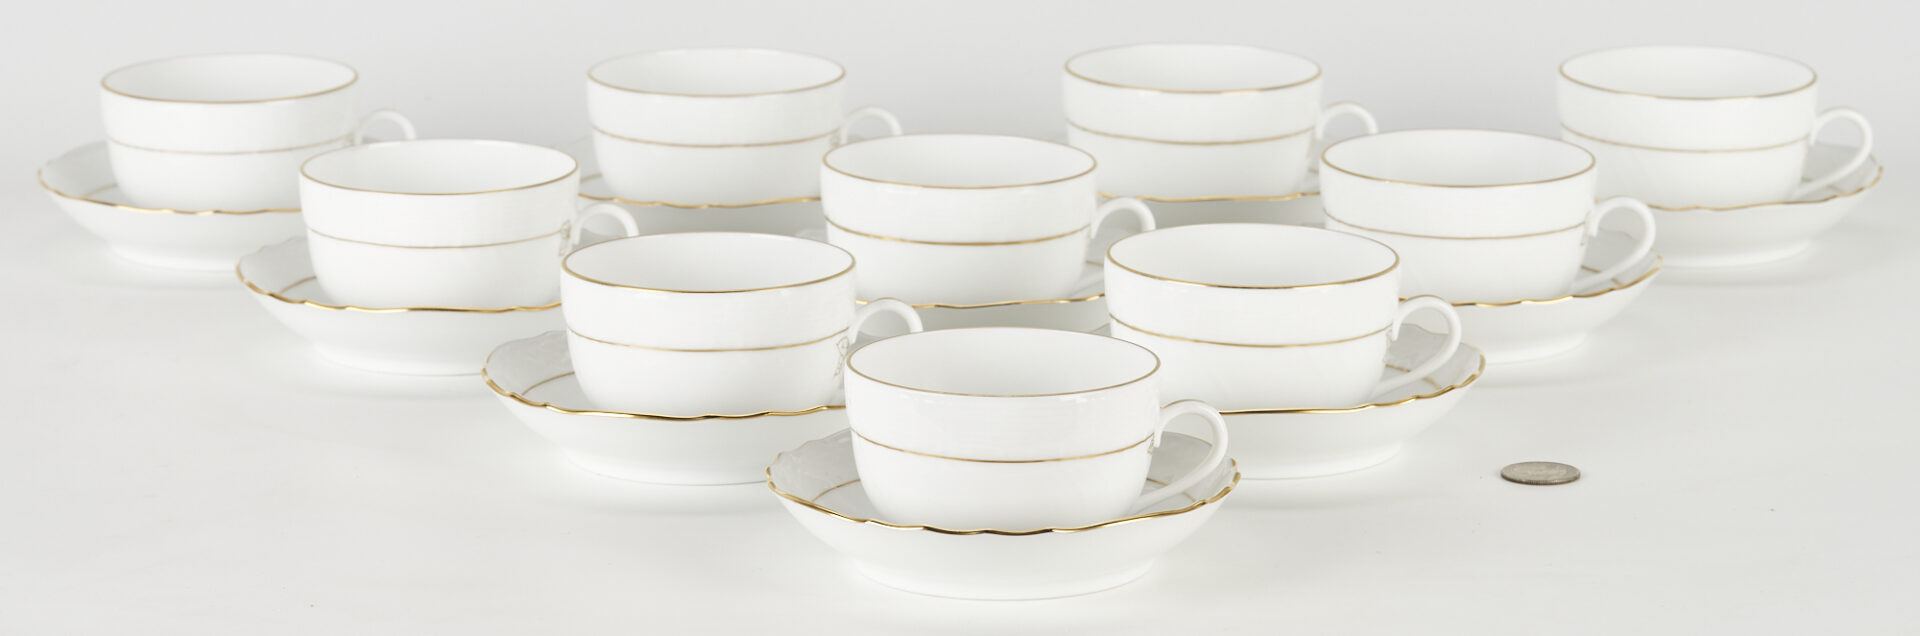 Lot 51: Herend Golden Edge Pattern Porcelain Cups & Saucers, 20 total